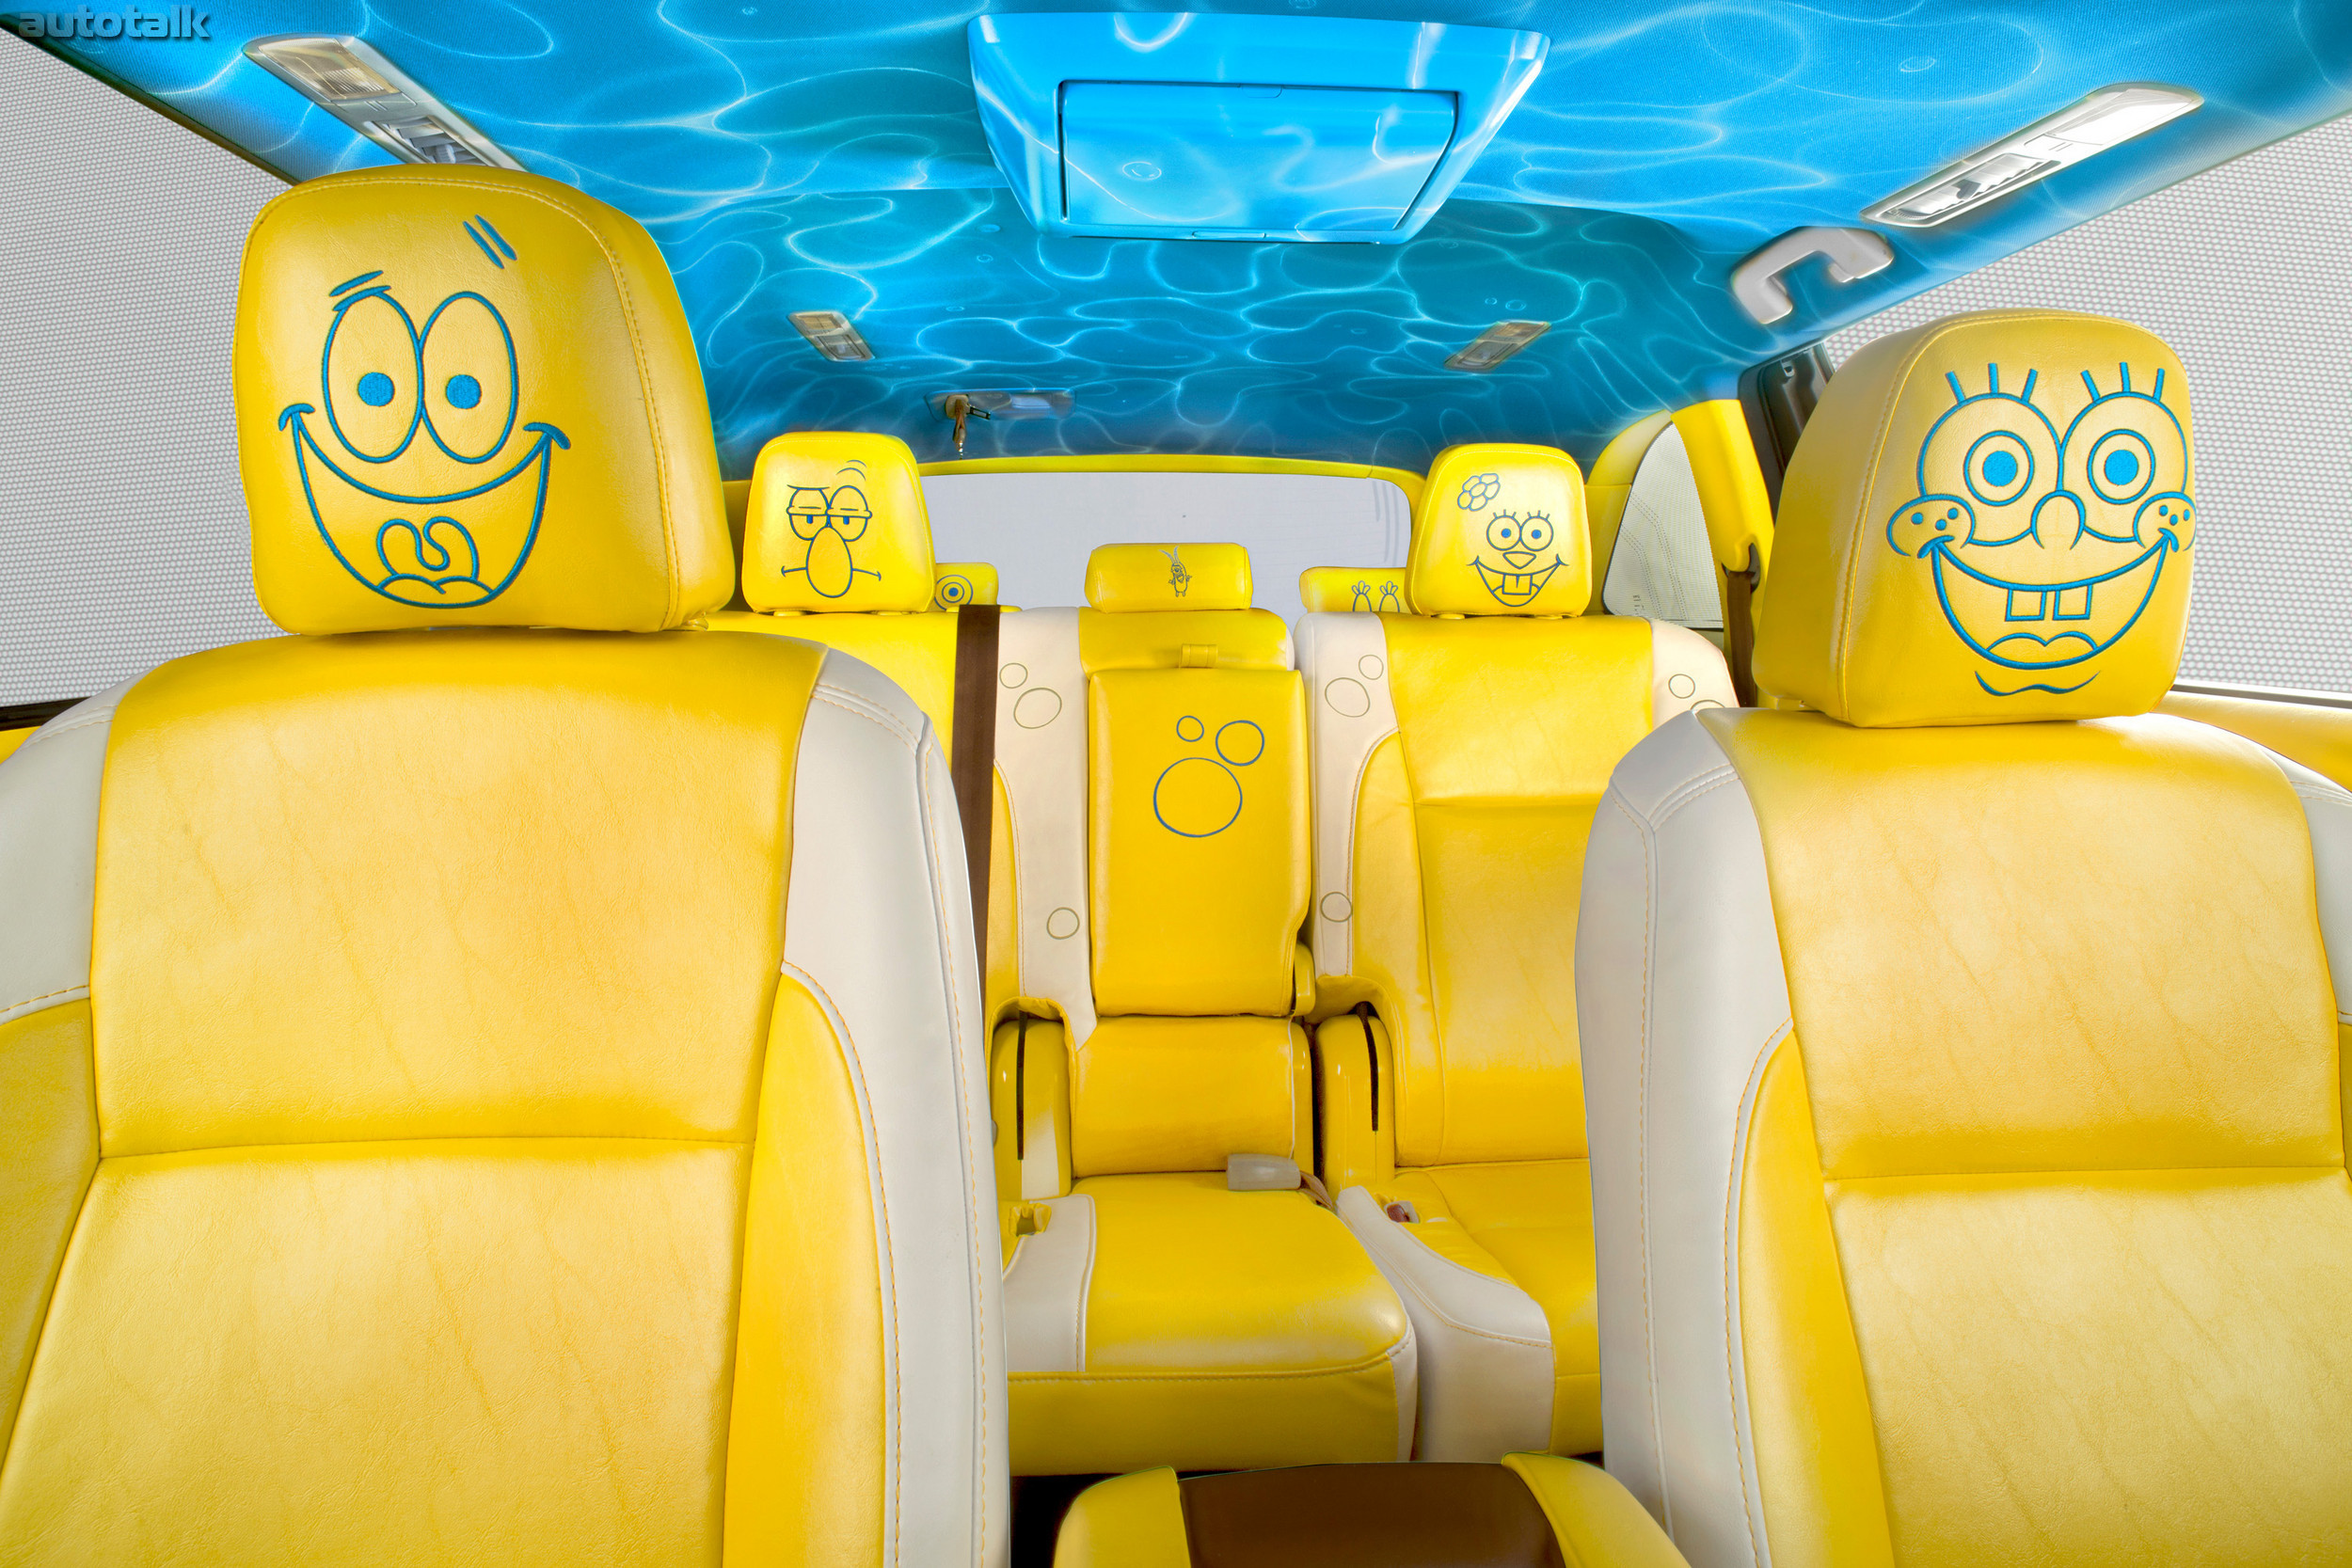 2014 Toyota Highlander SpongeBob SquarePants-Inspired